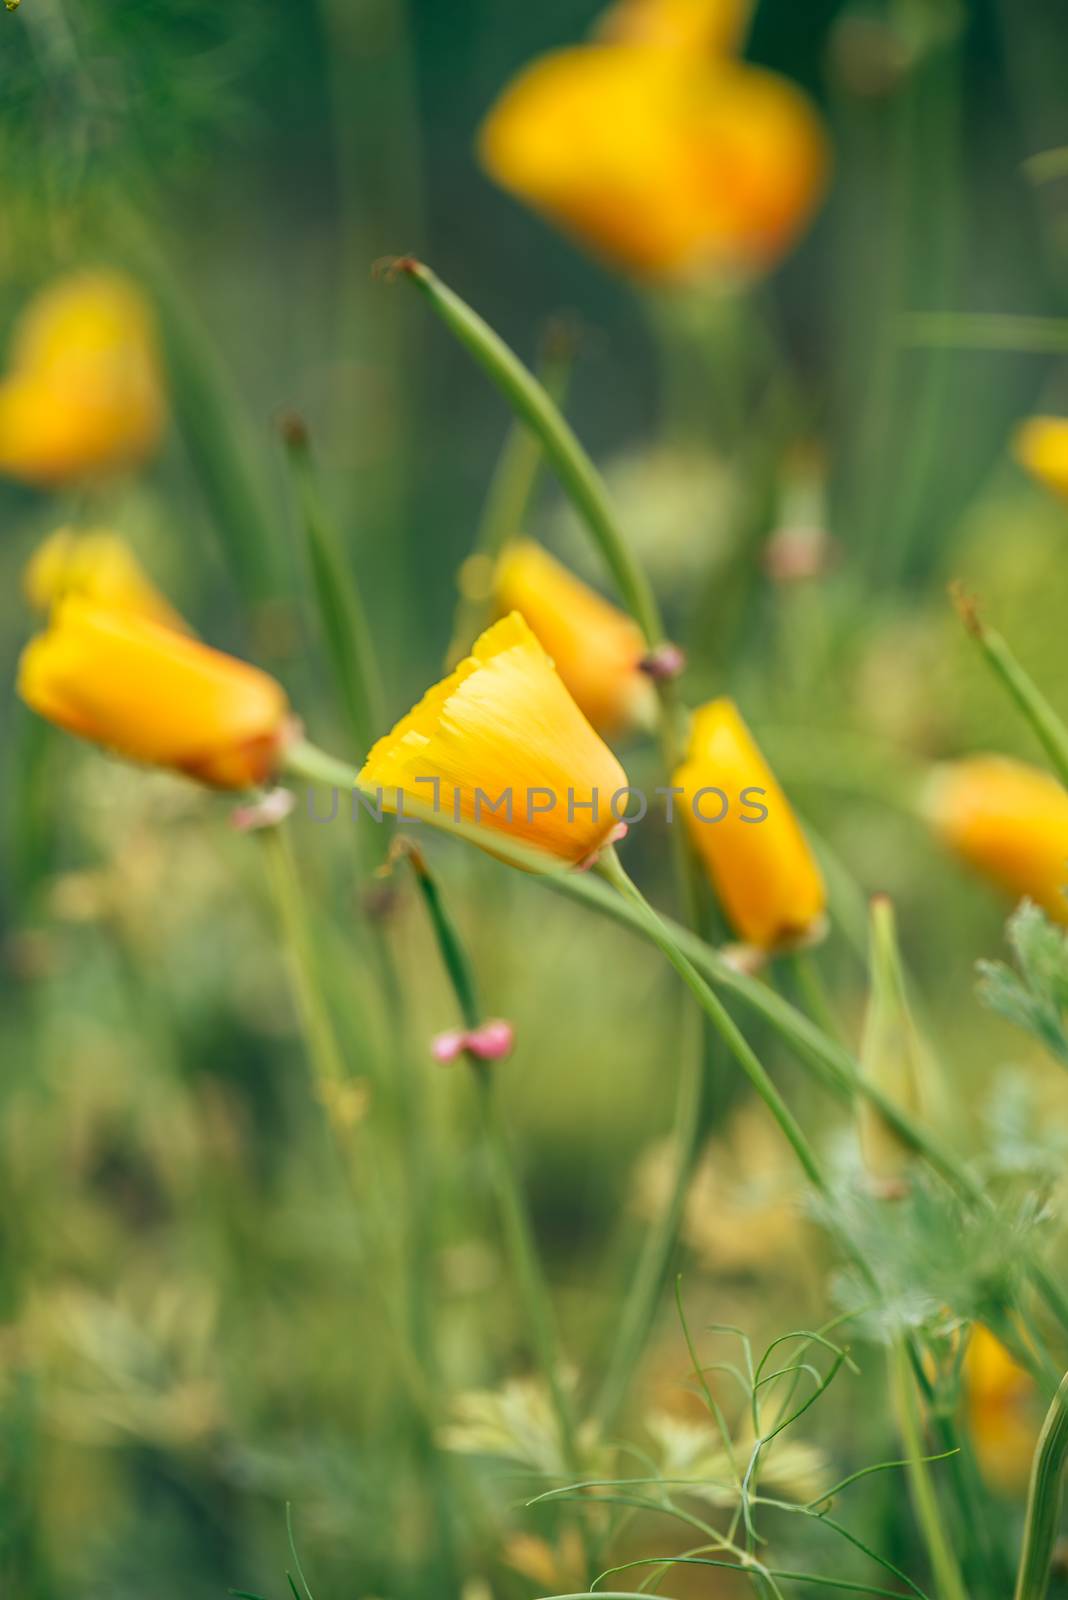 California Poppies on a Meadow. by Seva_blsv